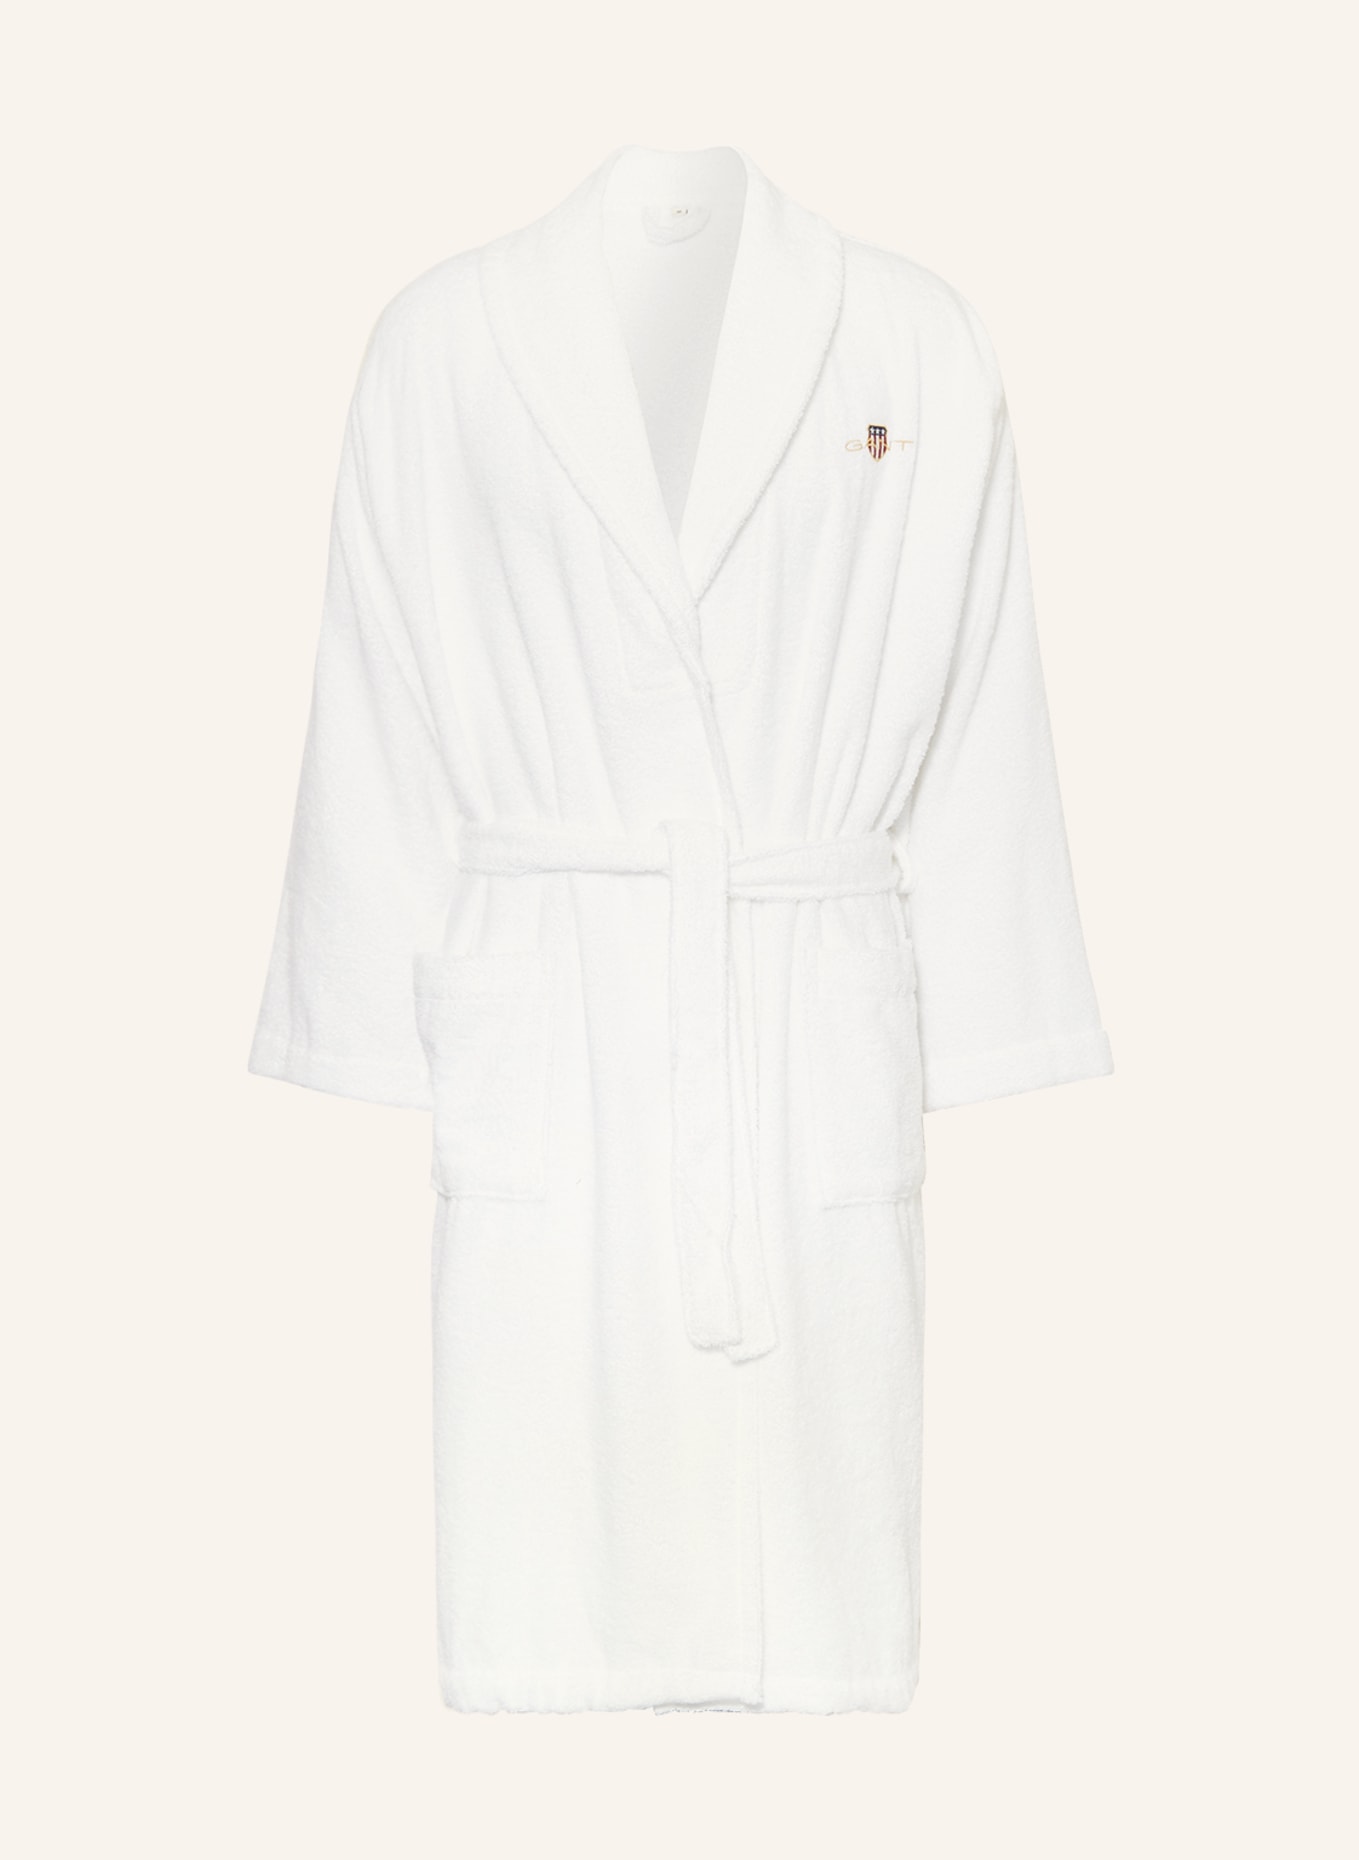 GANT HOME Unisex bathrobe, Color: WHITE (Image 1)